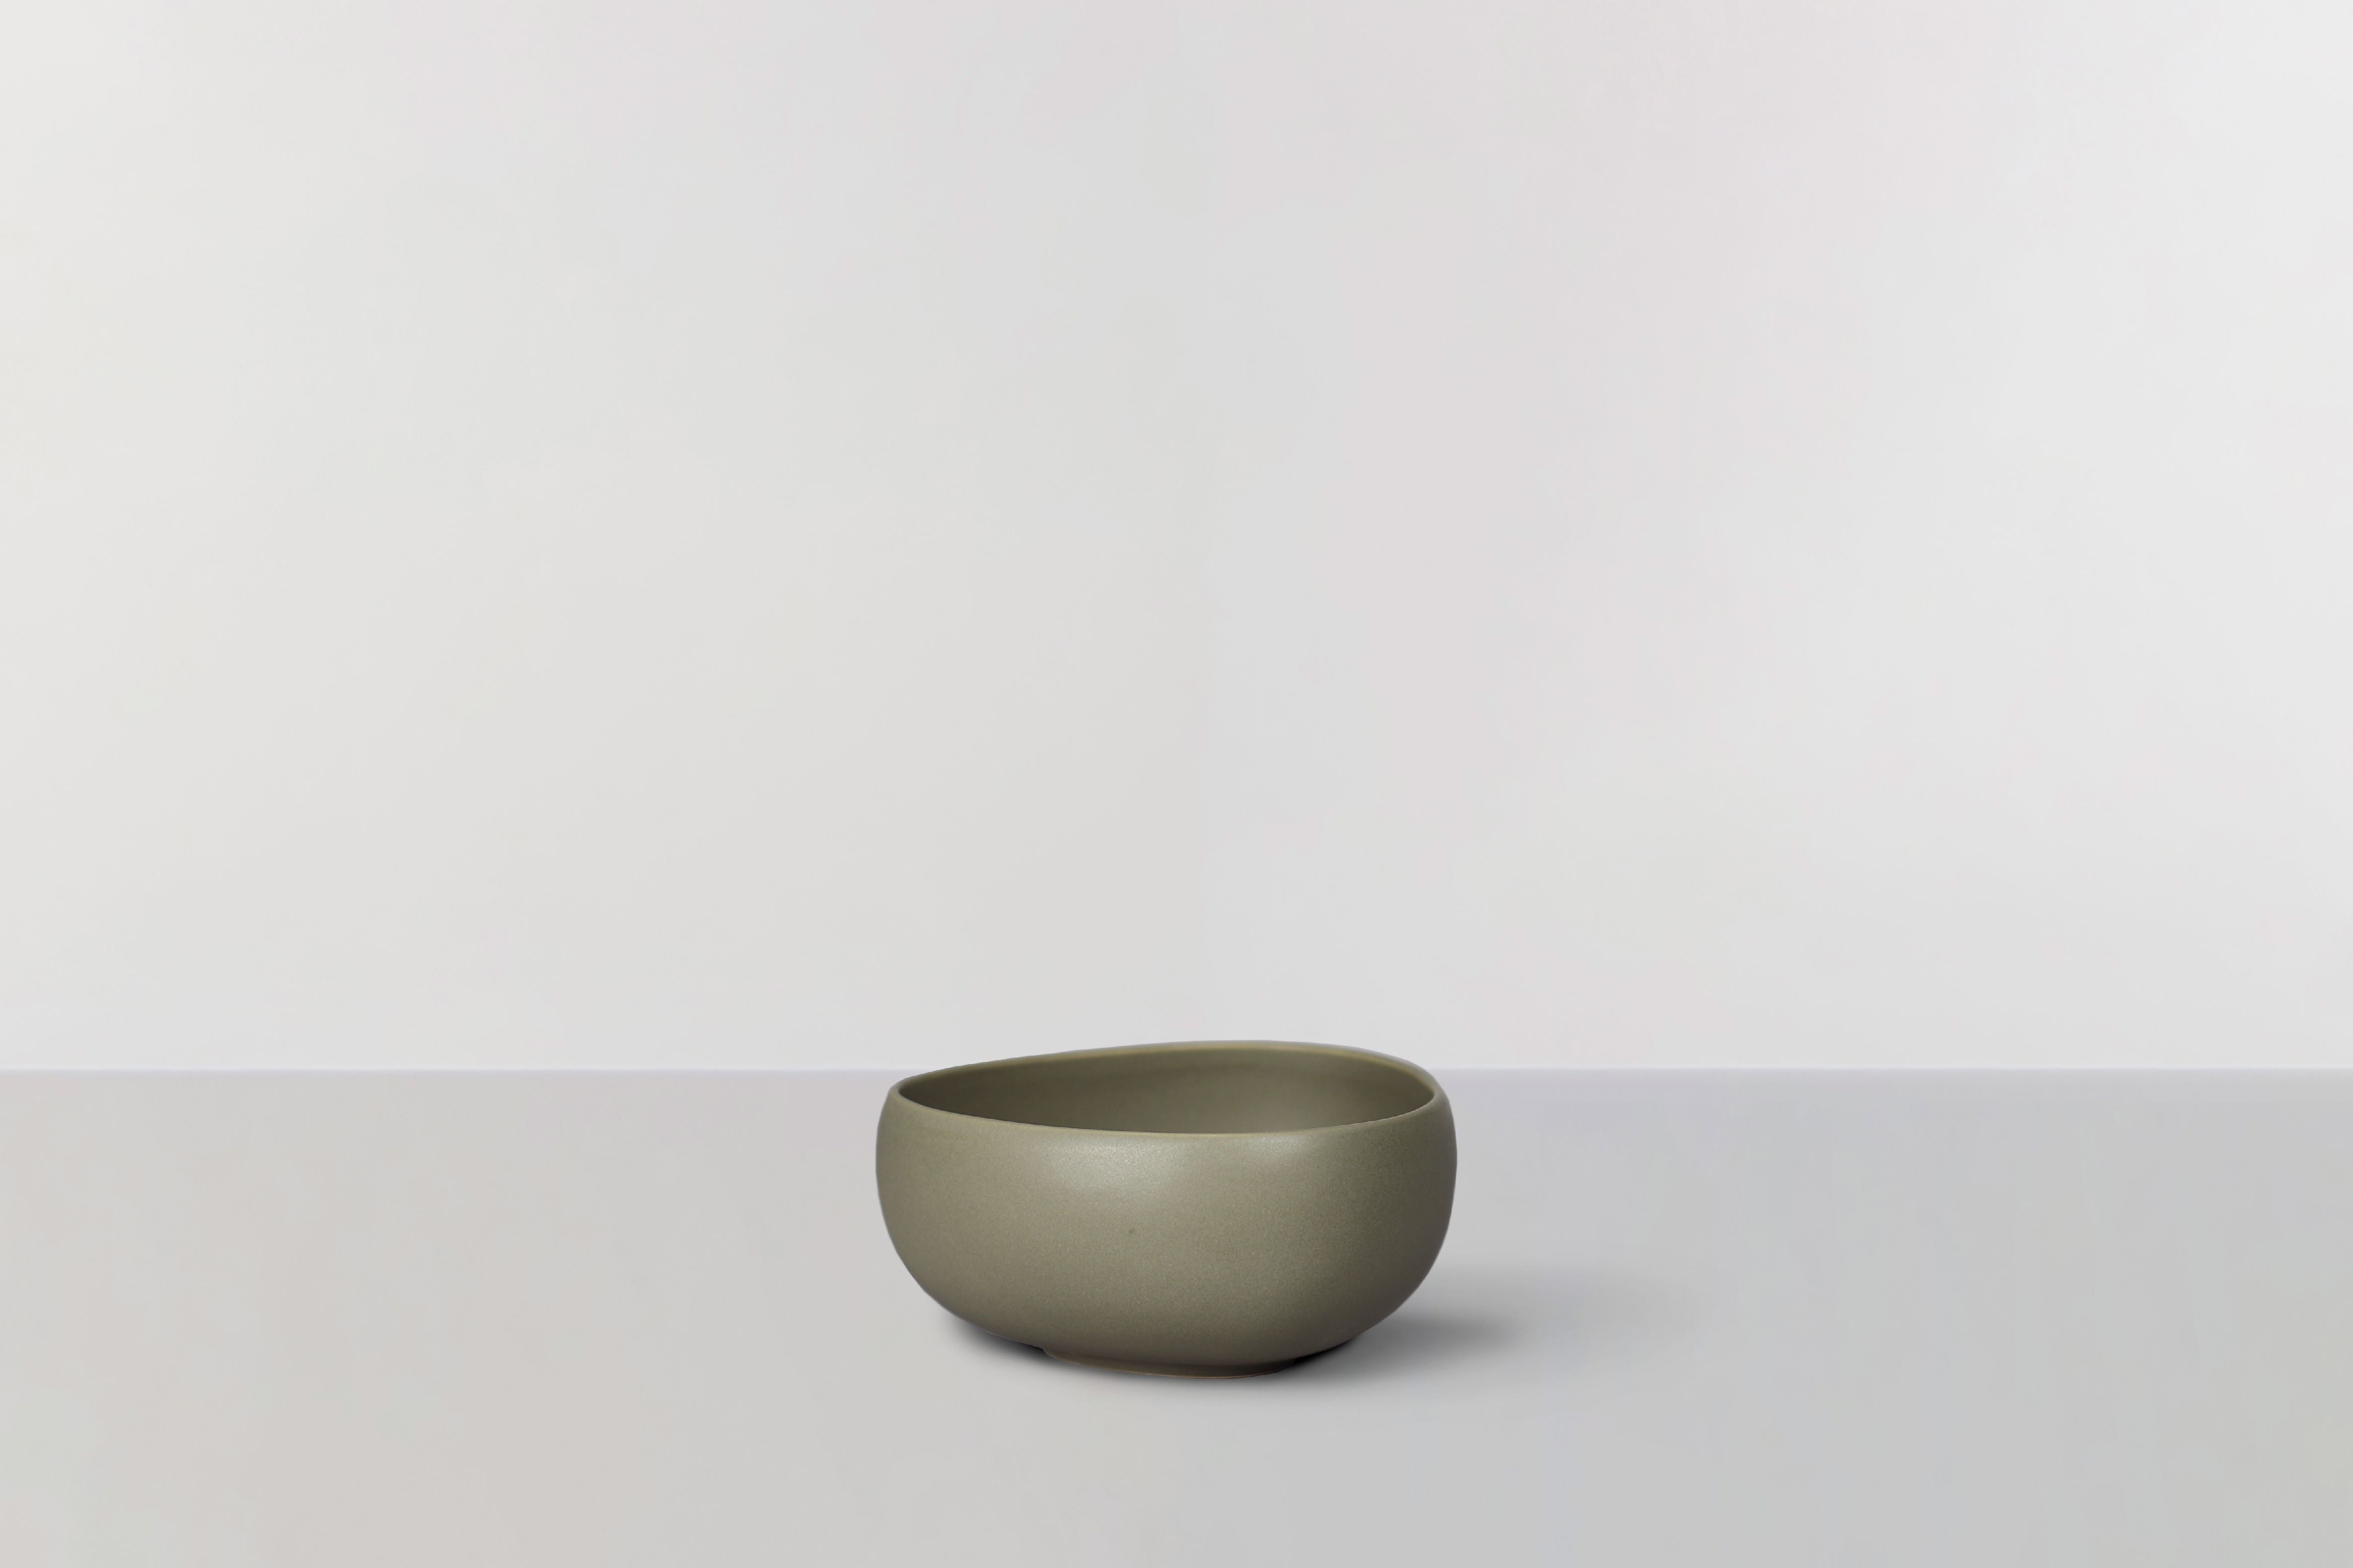 Ro Collection Signature Bowl Medium, Pale Green